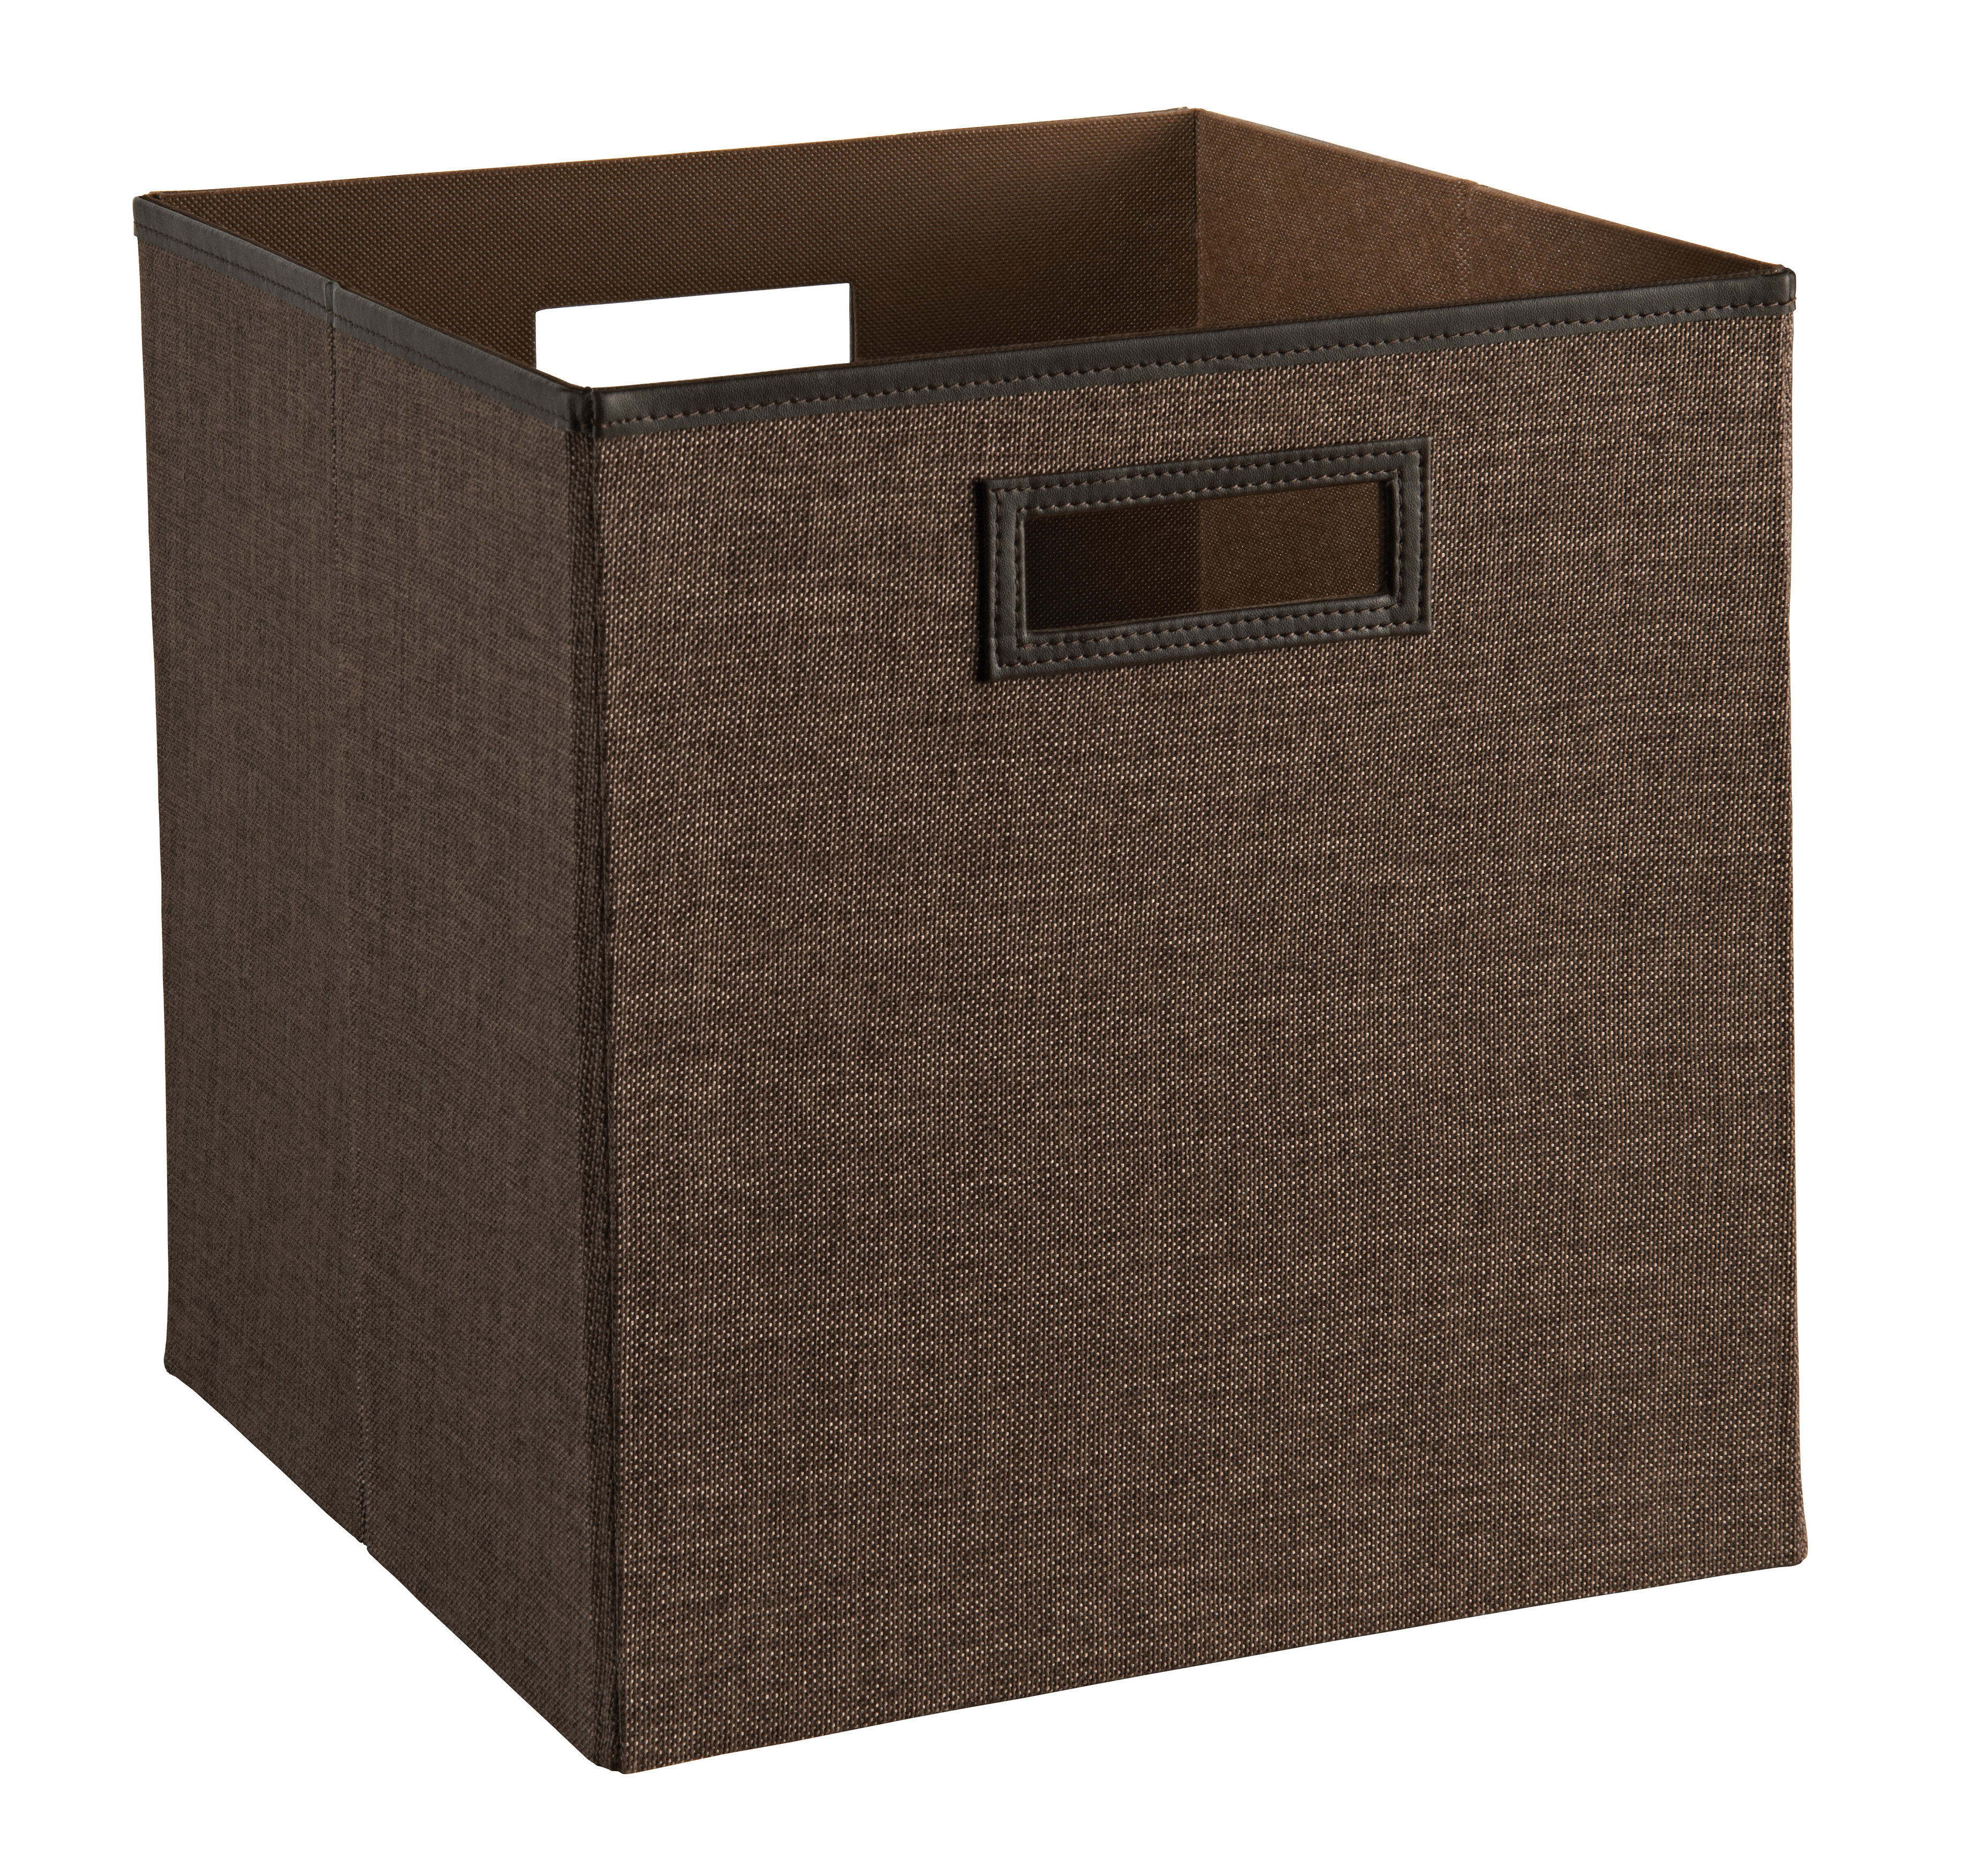 Decorative Storage Fabric Storage Bin Reviews Allmodern throughout dimensions 3713 X 3500